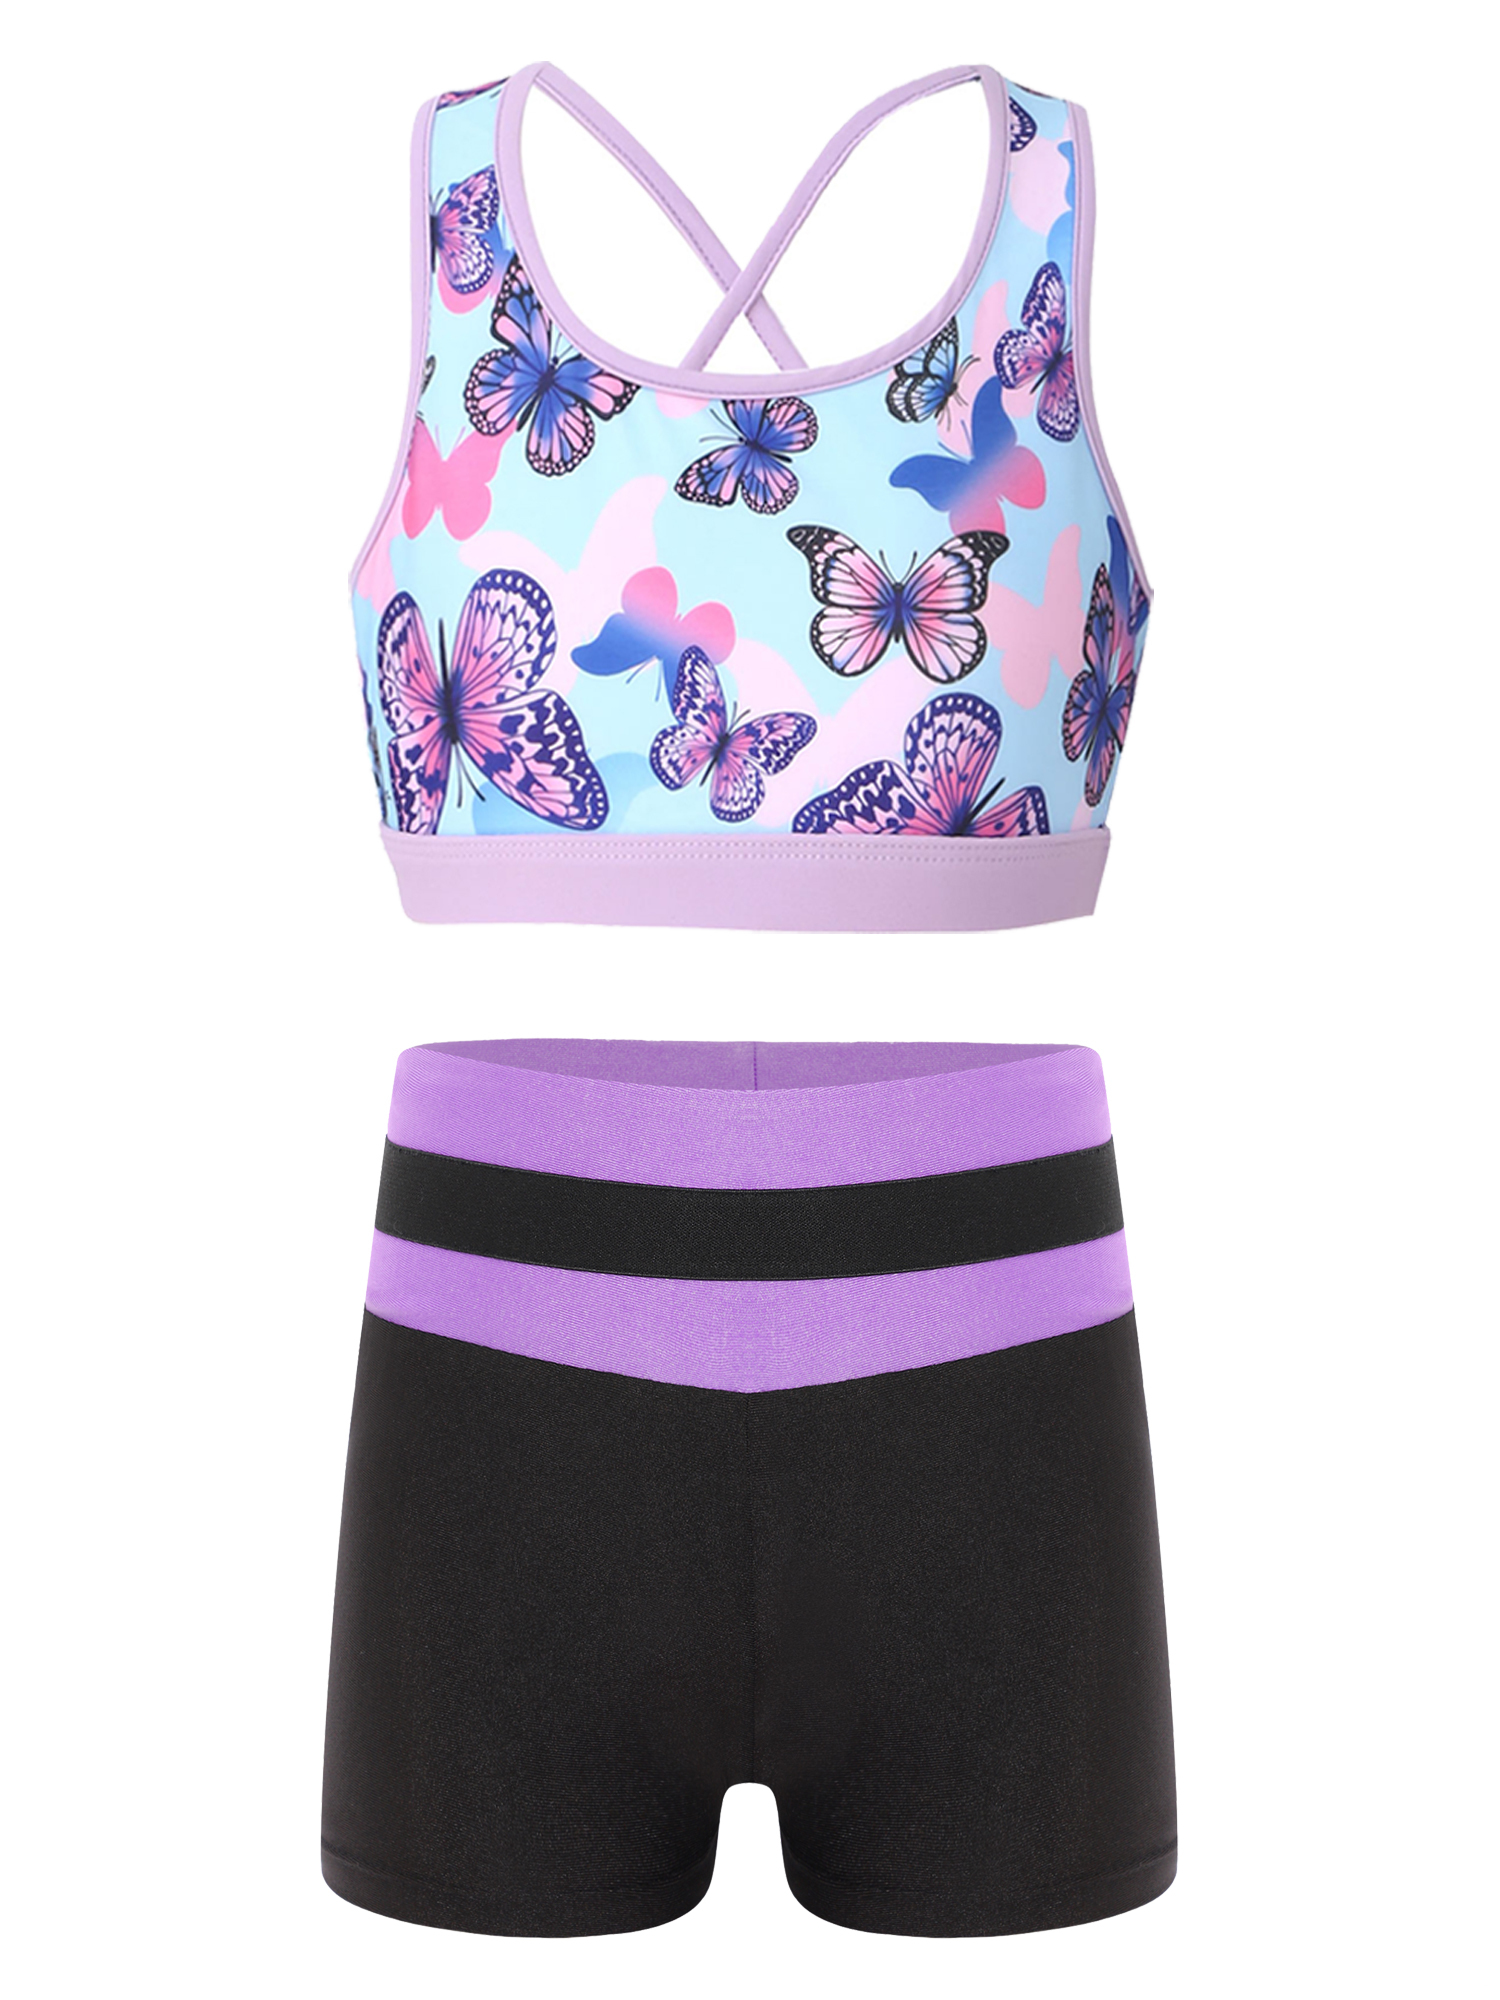 CHICTRY Kids Girls 2Pcs Swimsuit Sleeveless U Neck Printed Crop Top ...